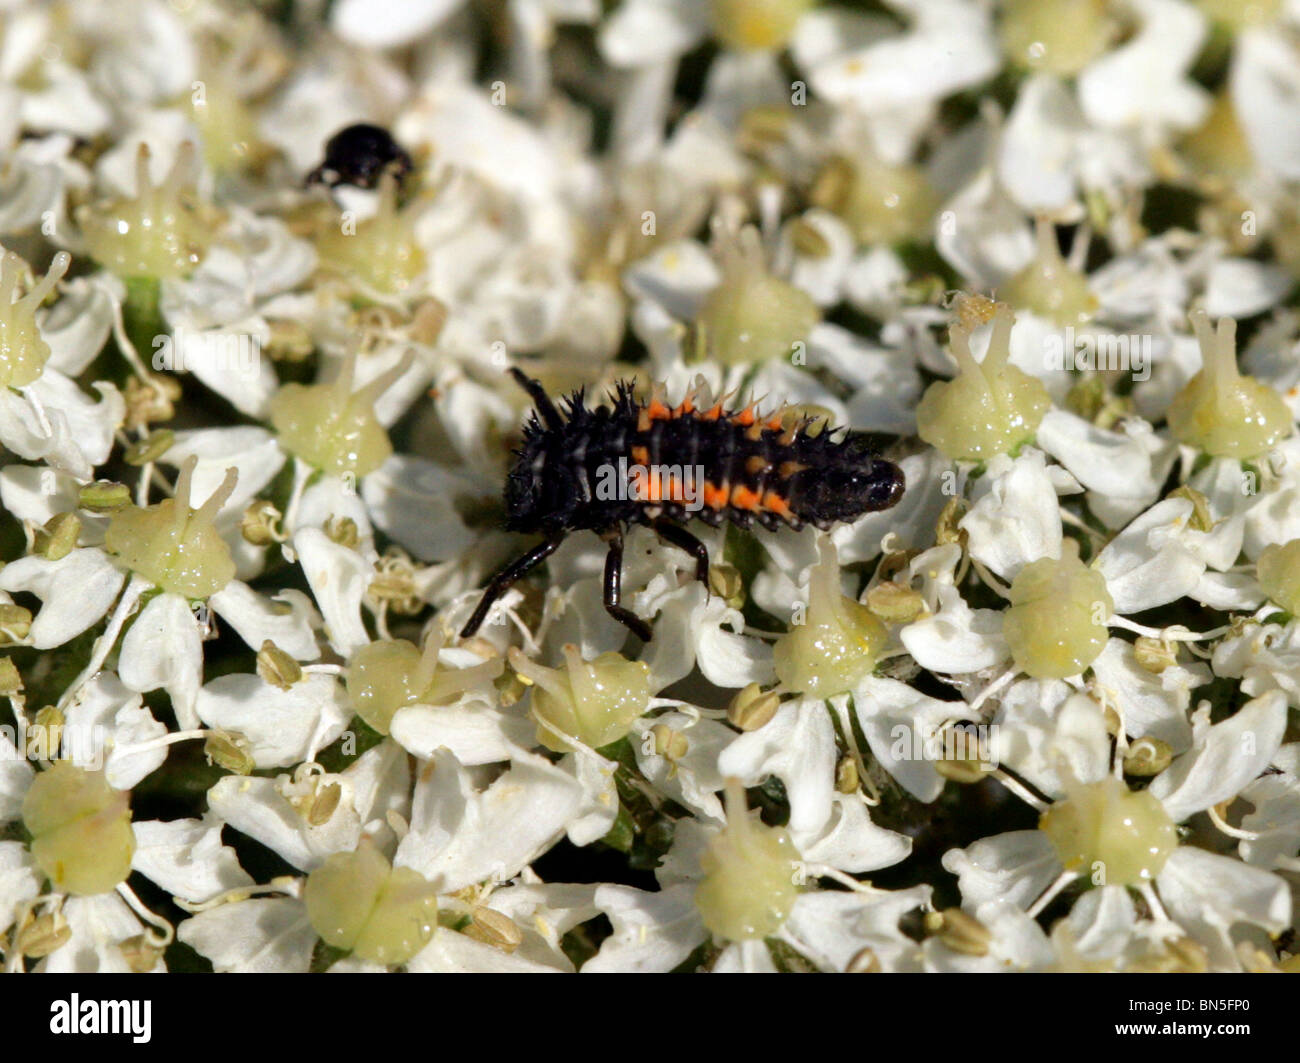 Harlekin-Marienkäfer-Käferlarve auf Bärenklau Blumen, Harmonia Axyridis, Coccinellidae, Coleoptera. Stockfoto